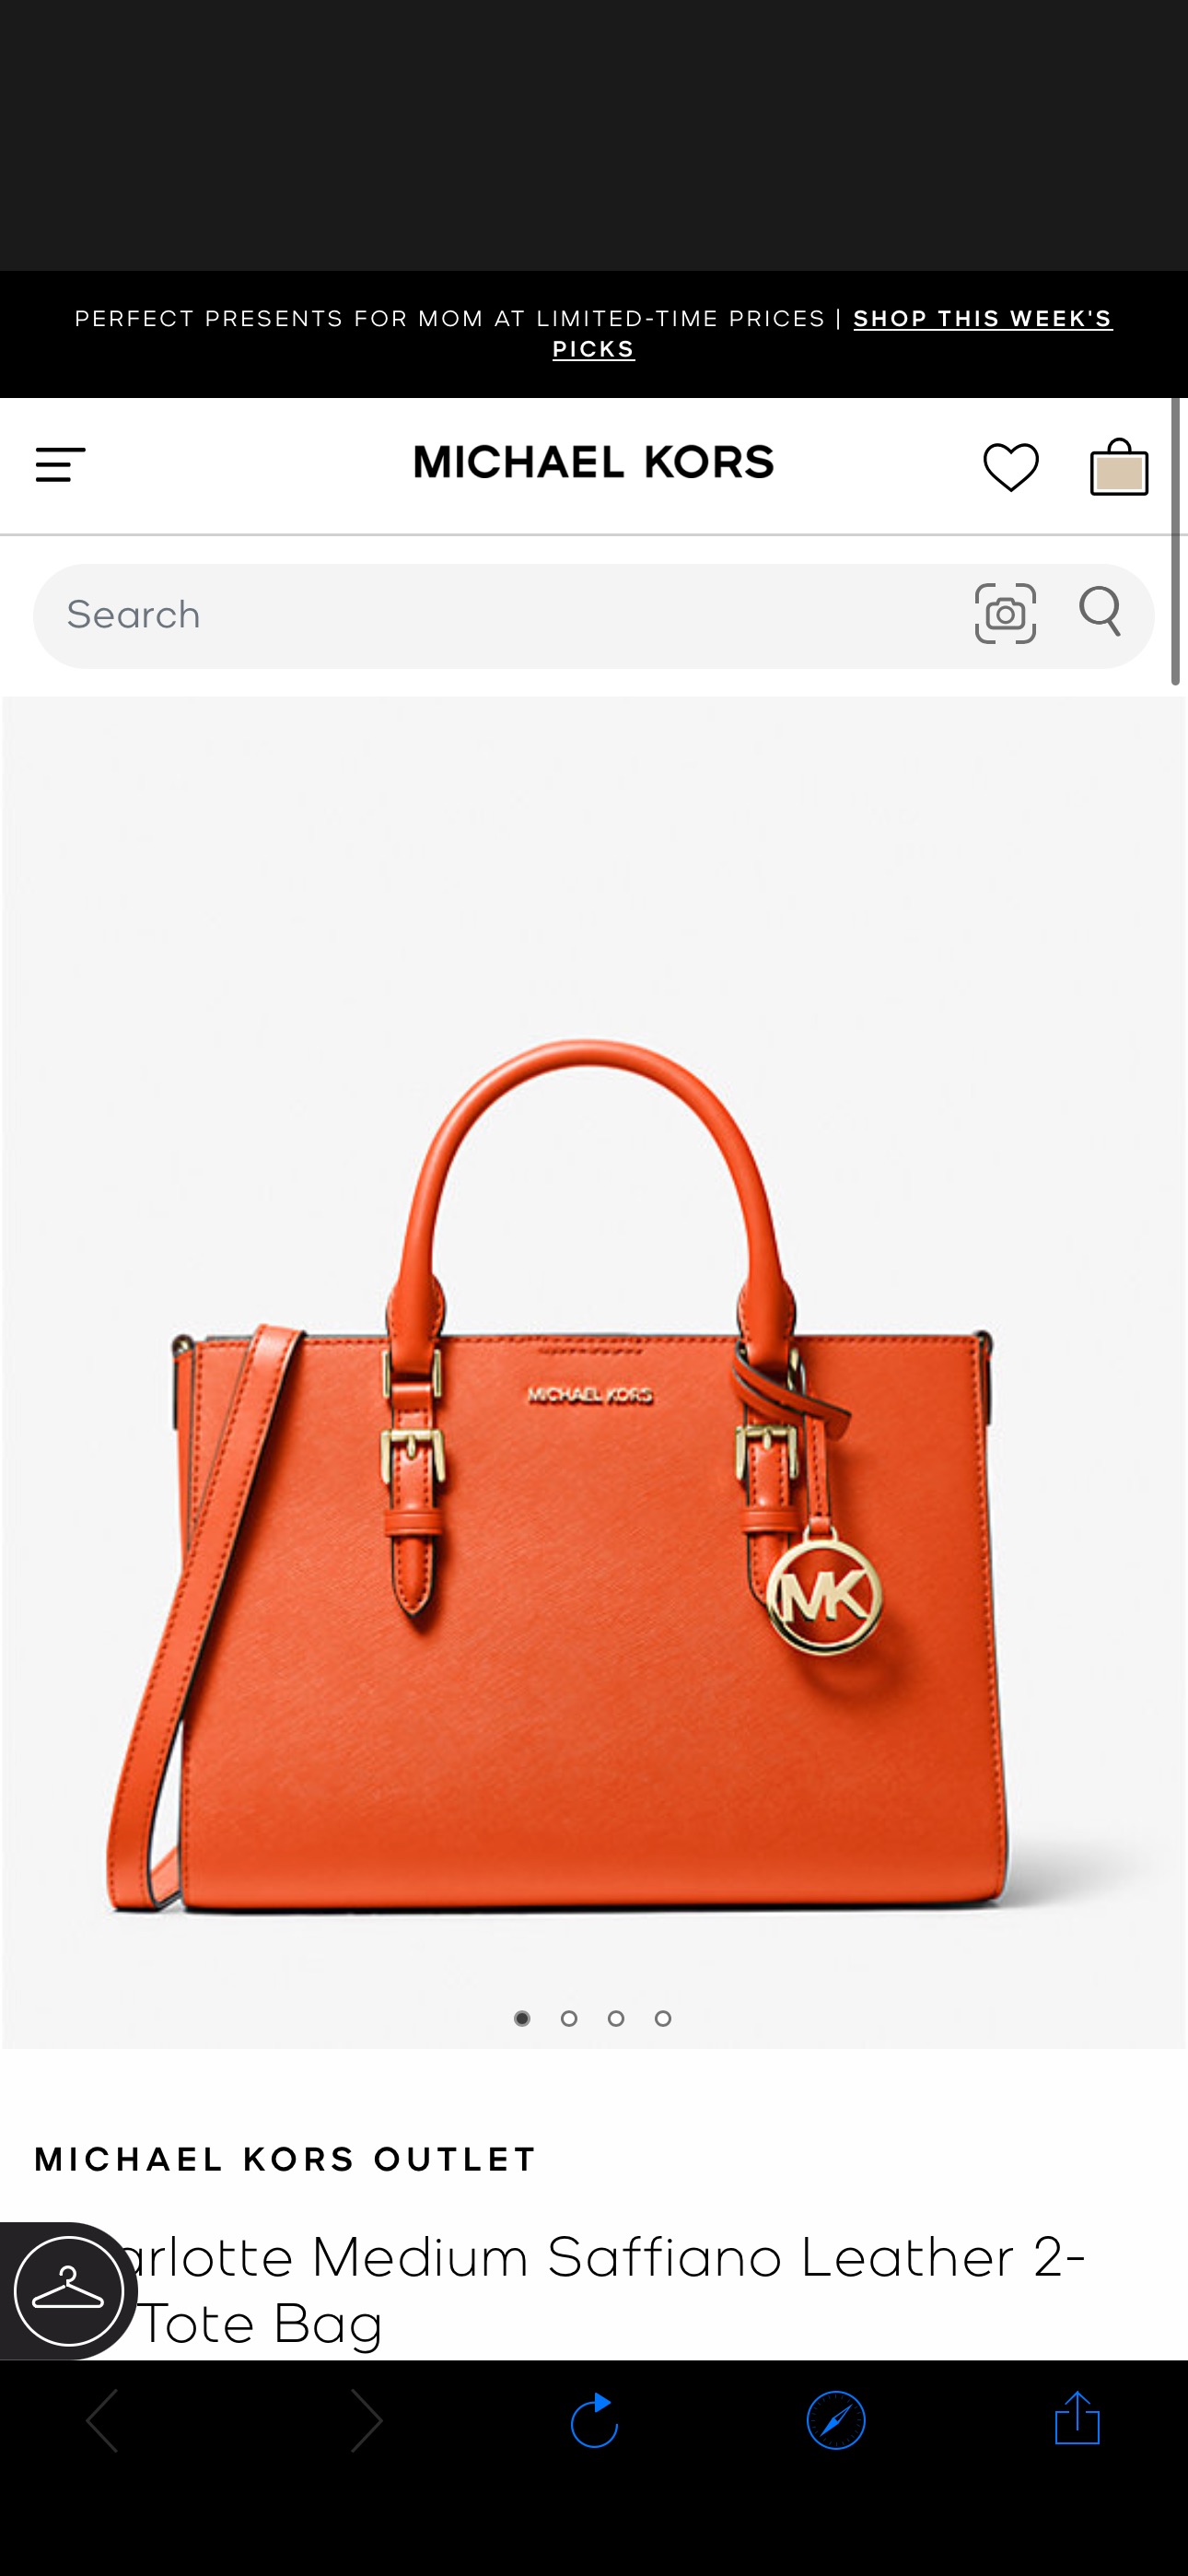 Charlotte Medium Saffiano Leather 2-in-1 Tote Bag | Michael Kors